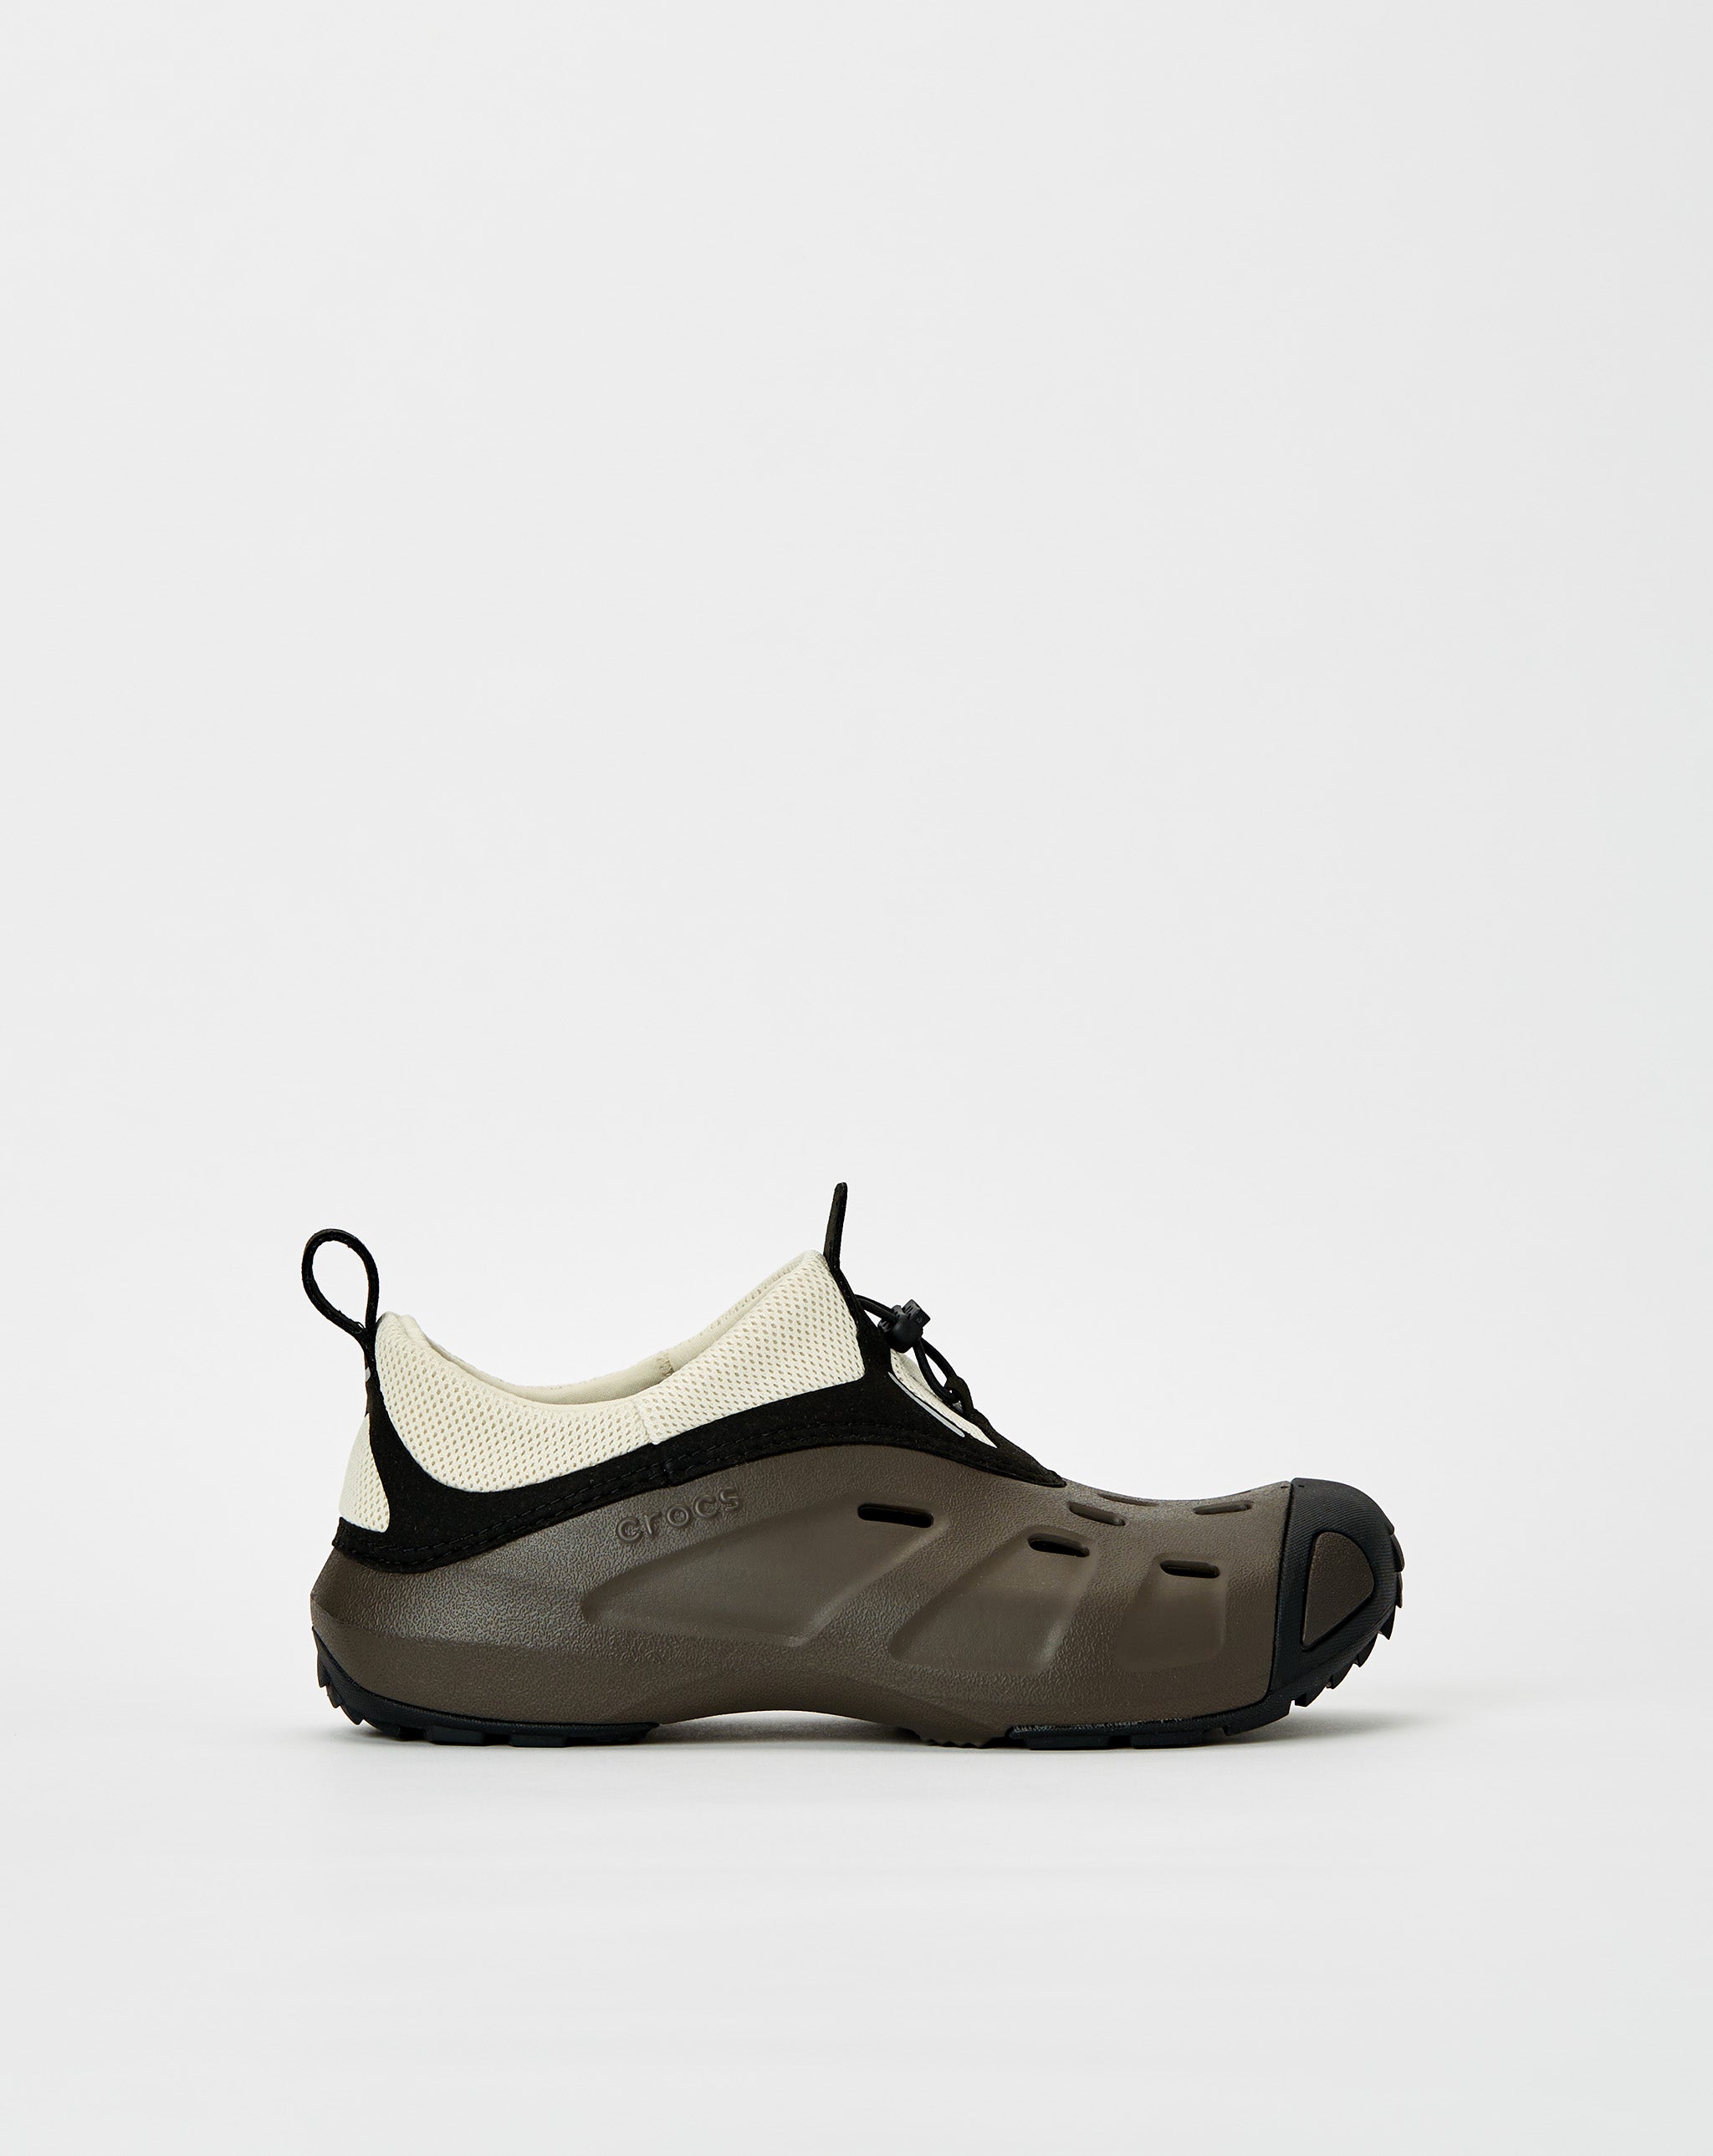 Crocs womens purple and yellow nike shoes black friday  - Cheap Erlebniswelt-fliegenfischen Jordan outlet